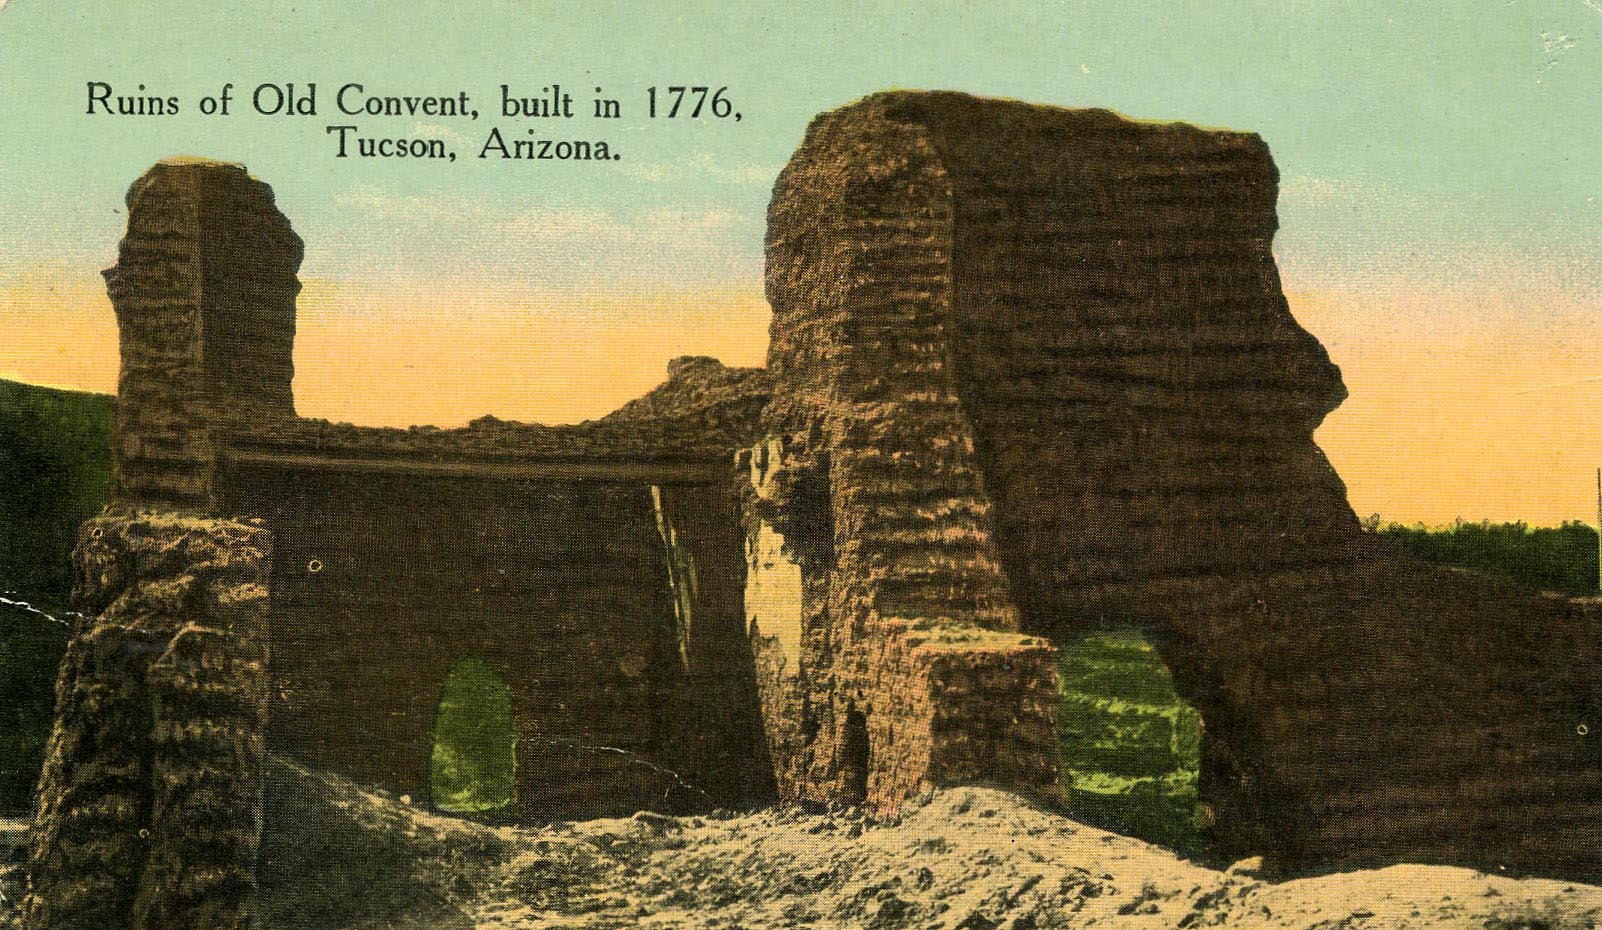 Mission San Agustin del Tucson ruins